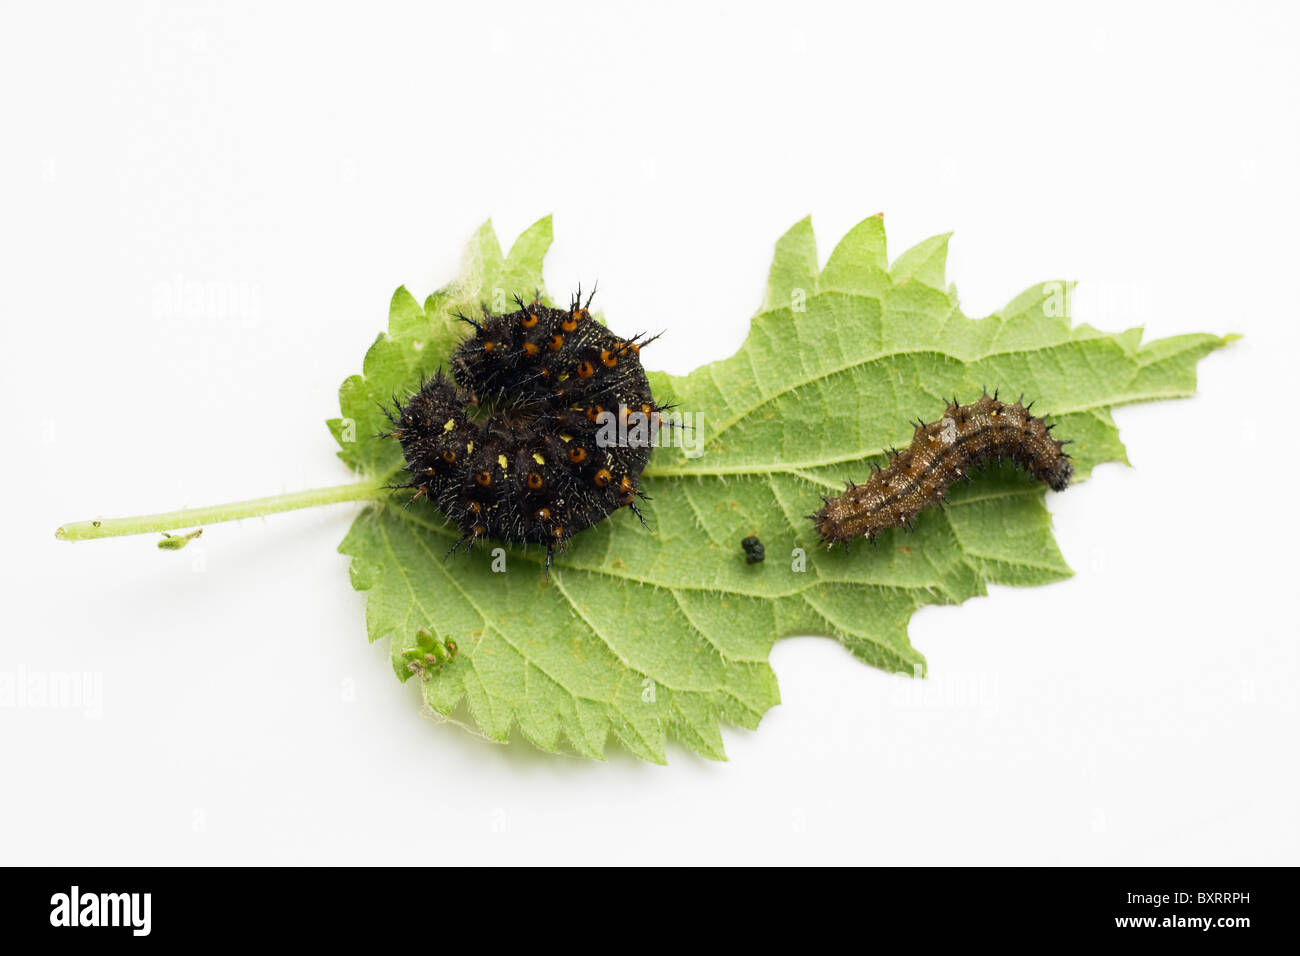 Caterpillars on leaf Stock Photo